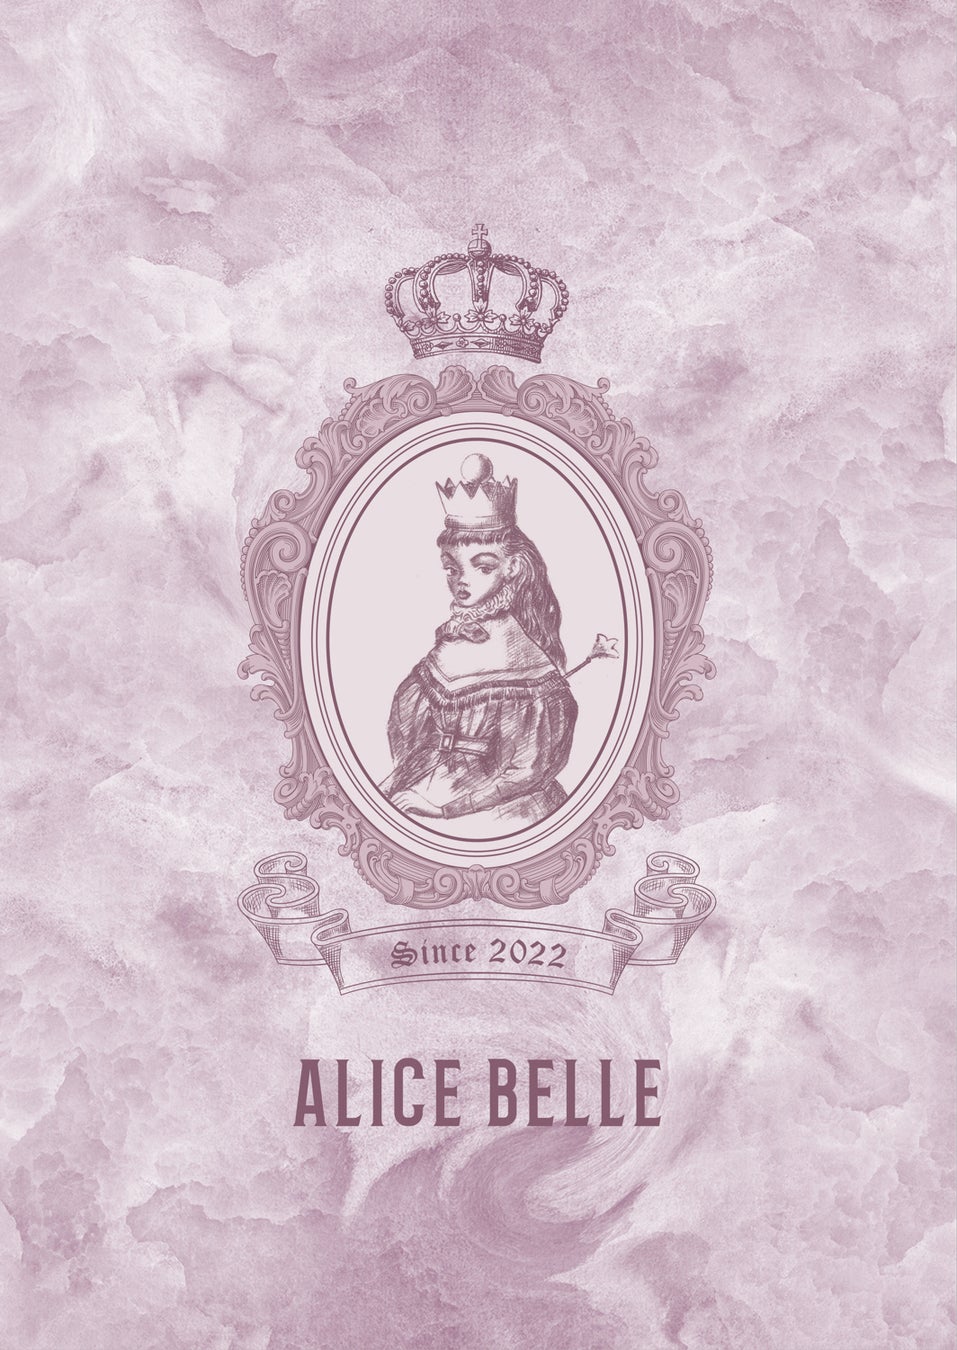 ALICE BELLE　ポップアップイベント 「ALICE BELLE in wonder land」